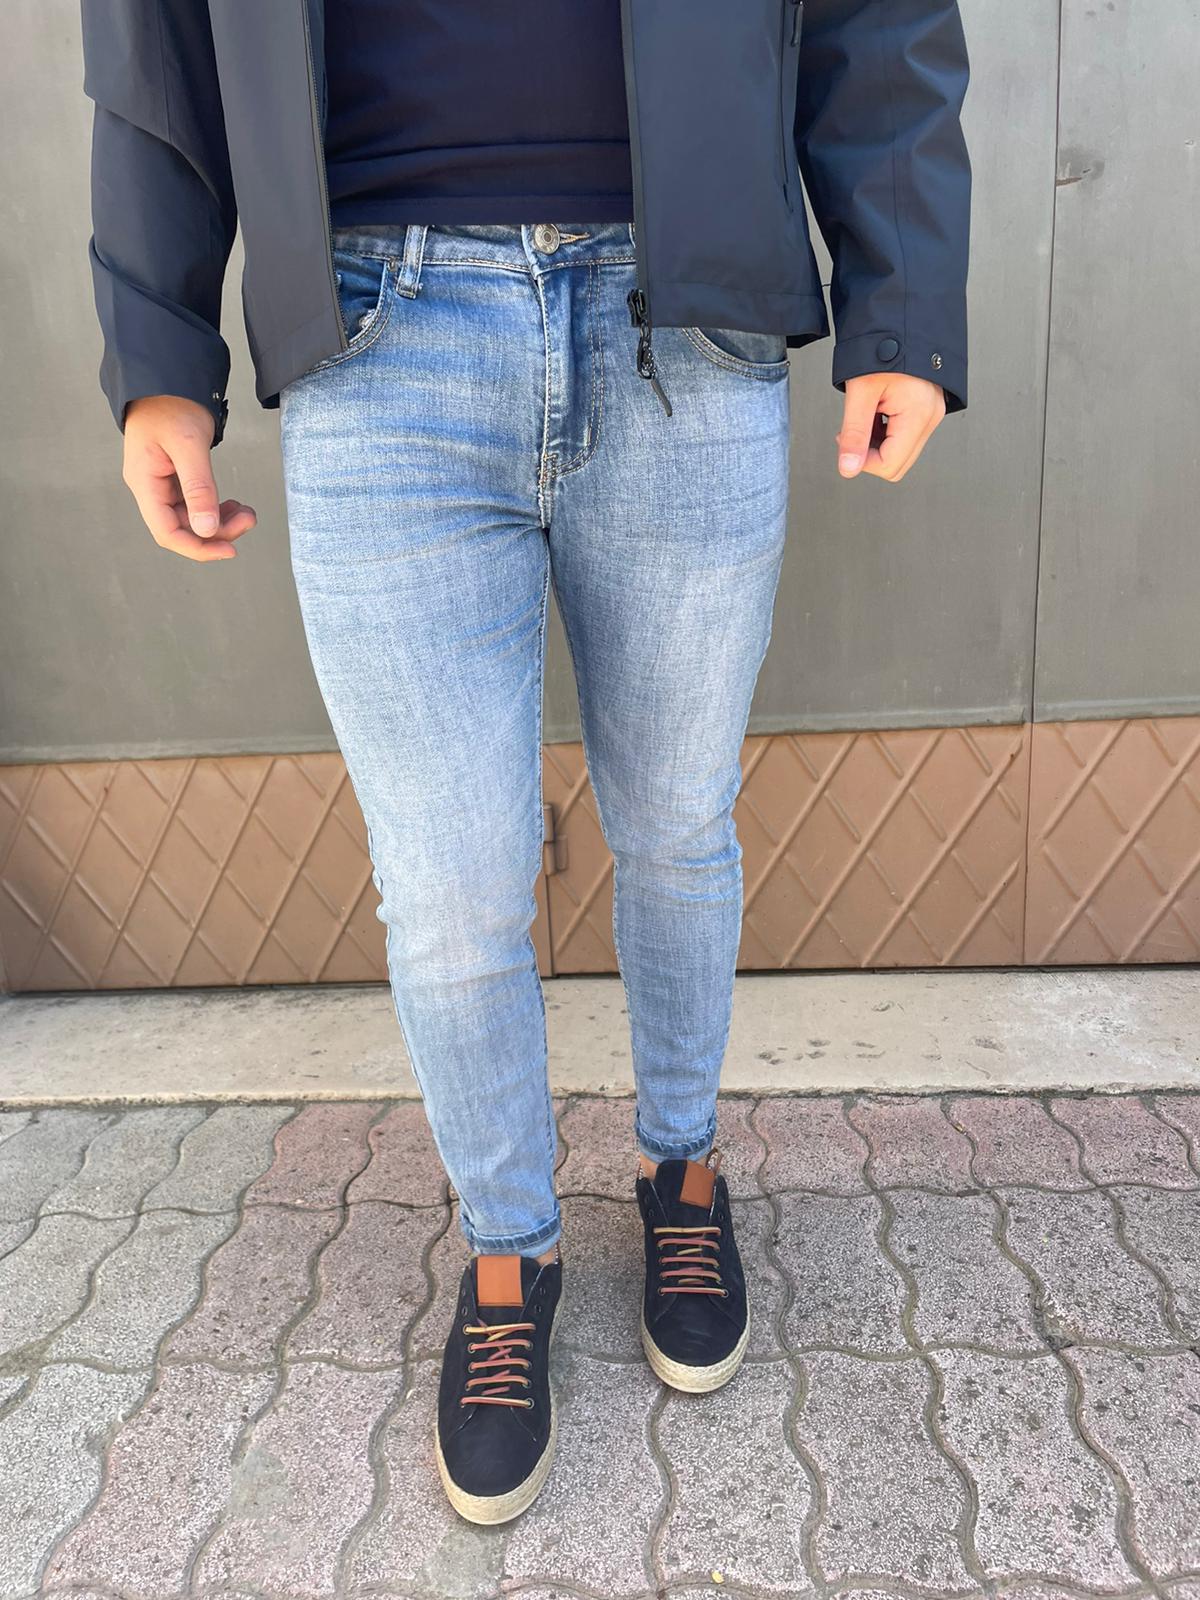 Men's capri jeans with 5 pockets, slim fit